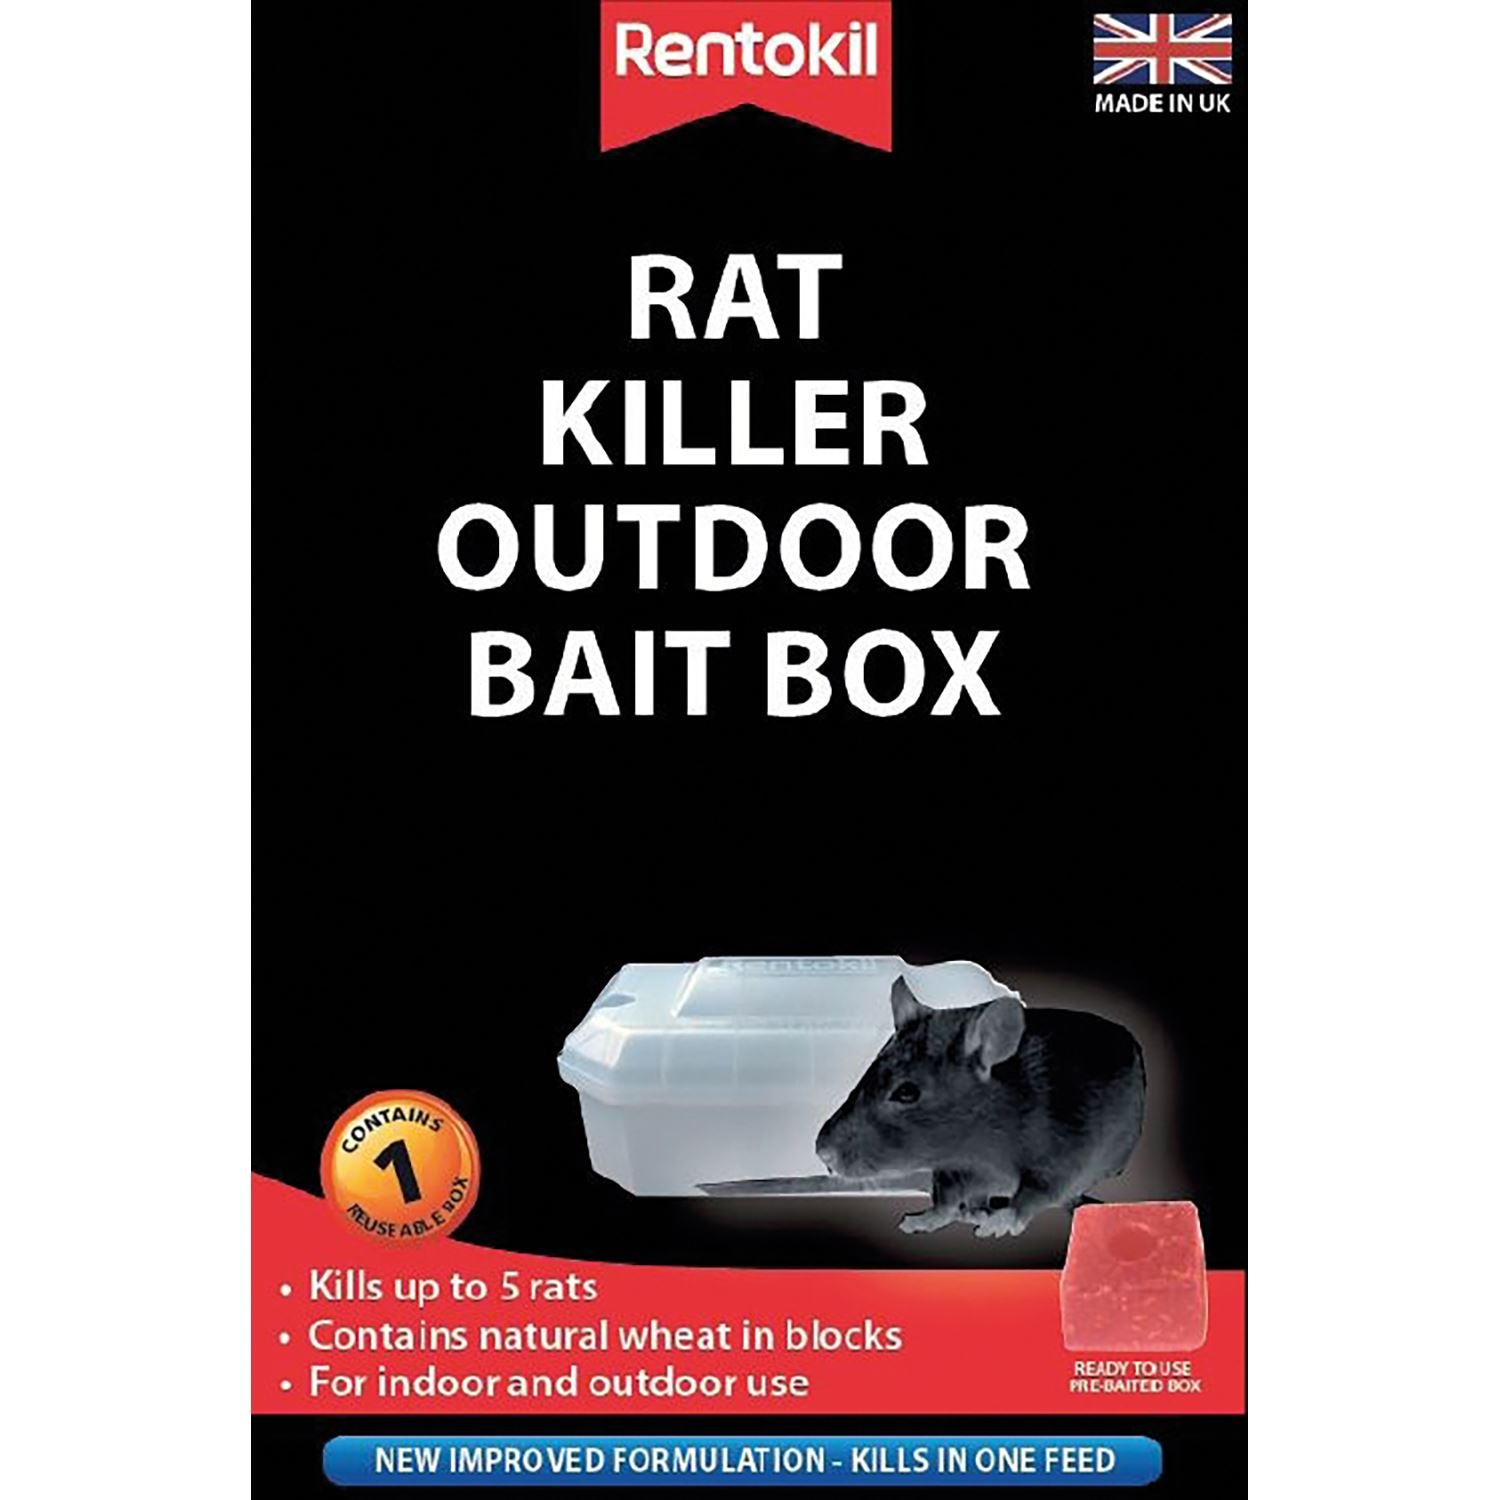 Rentokil Rat Killer Outdoor Bait Box - Just Horse Riders